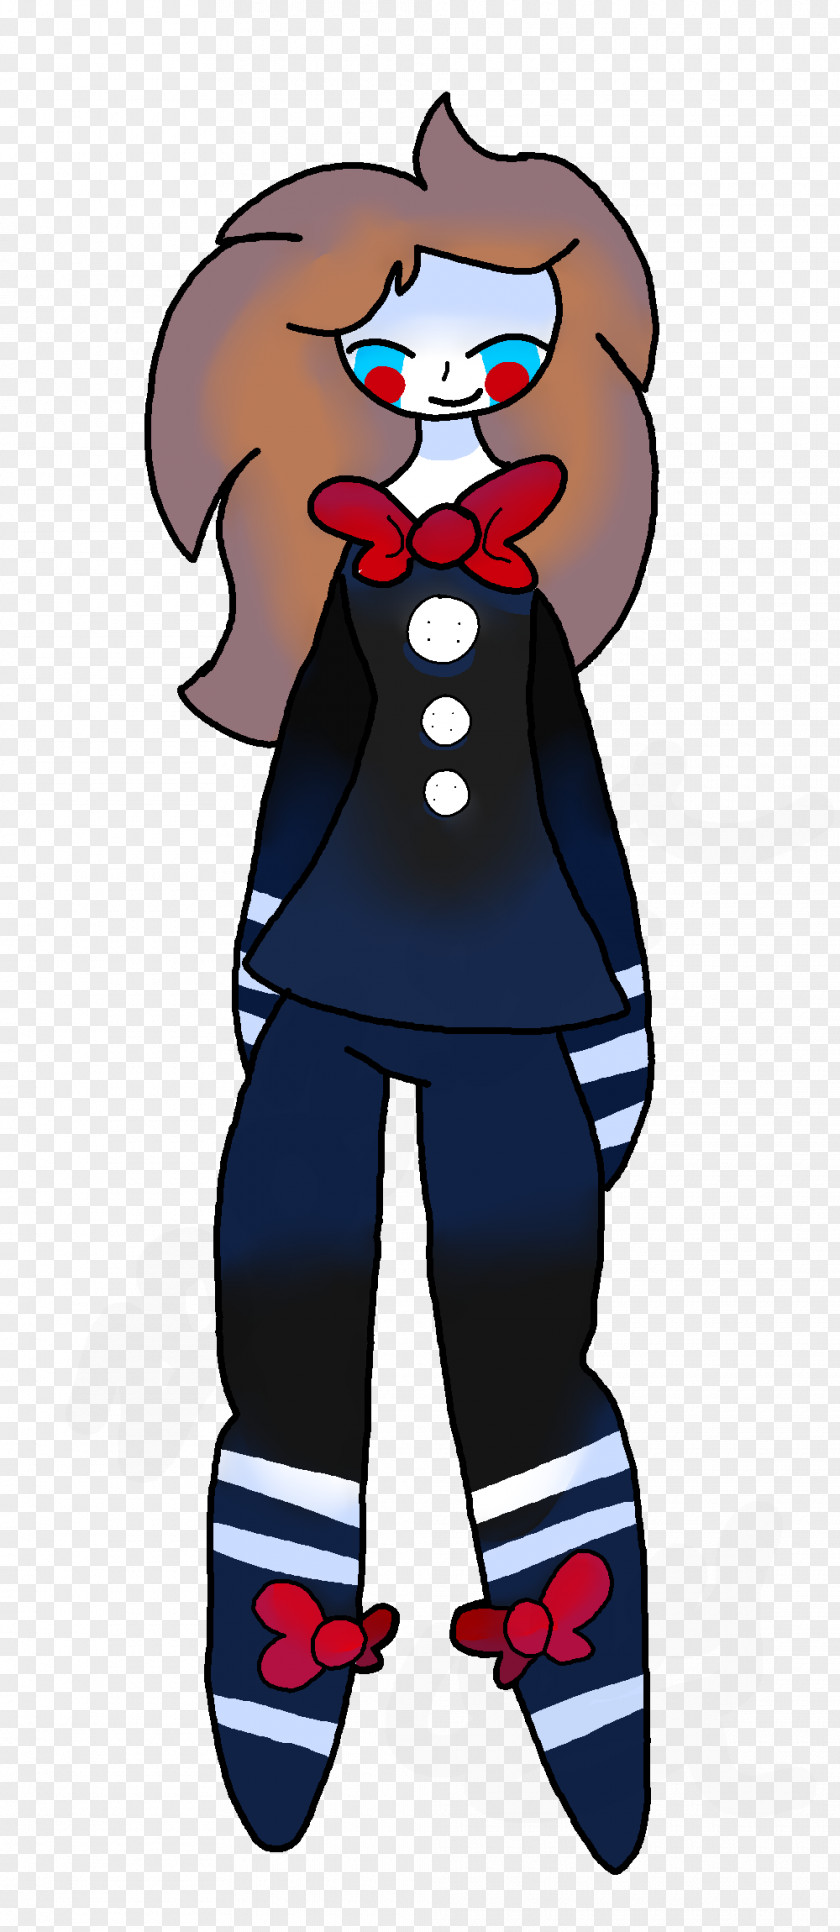 Kitt Shoulder Mascot Character Clip Art PNG